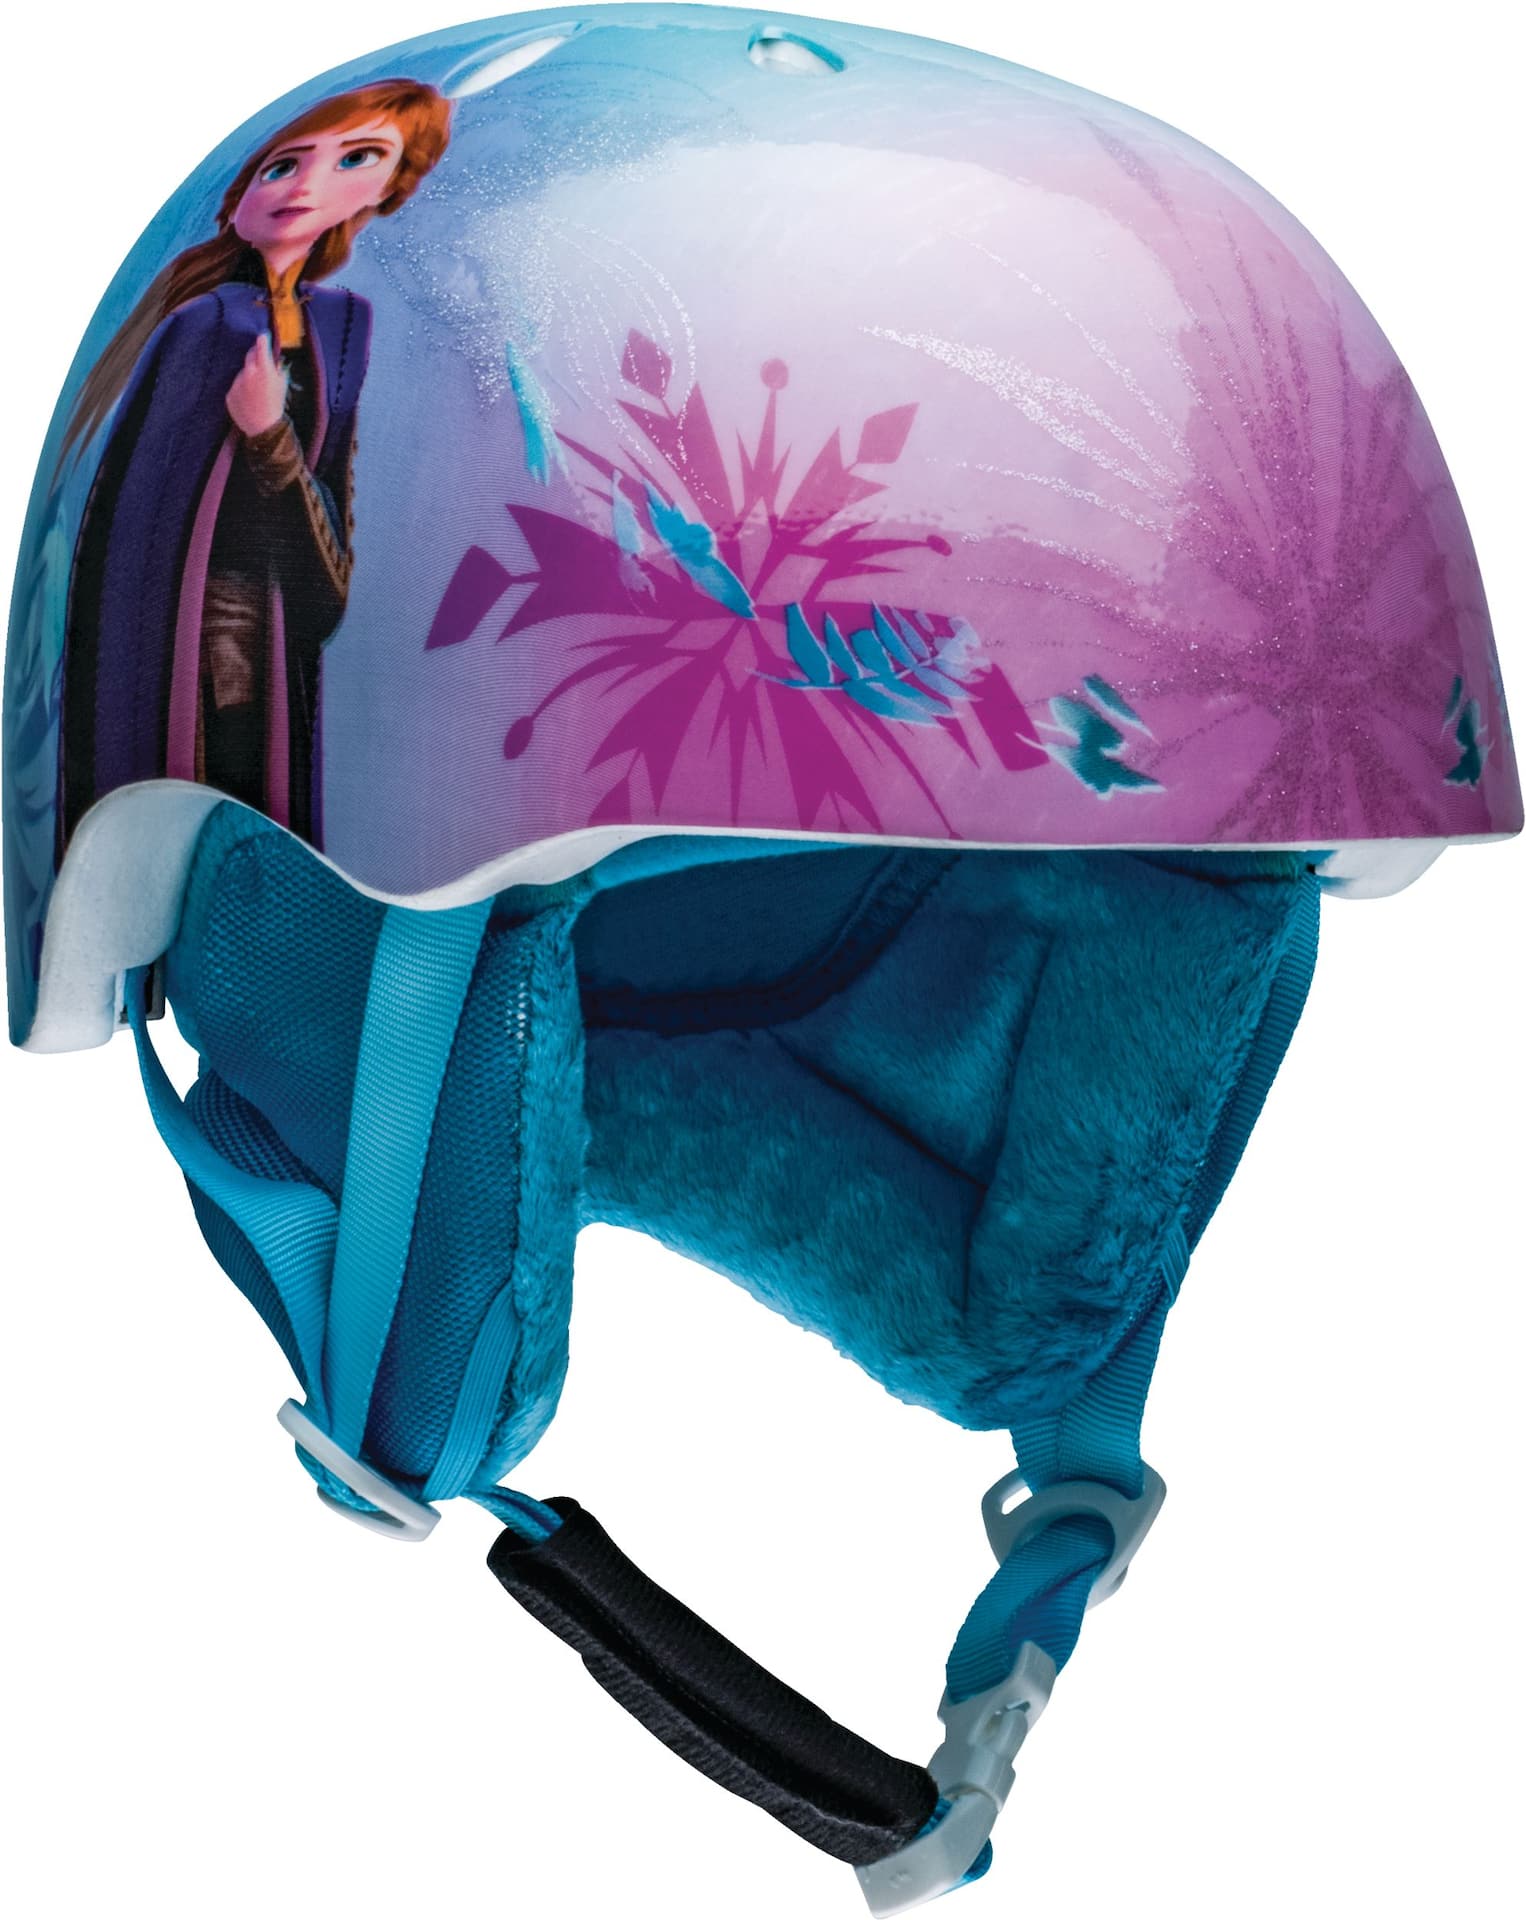 Disney Frozen Kids' Protective Ski/Snowboard Safety Helmet with